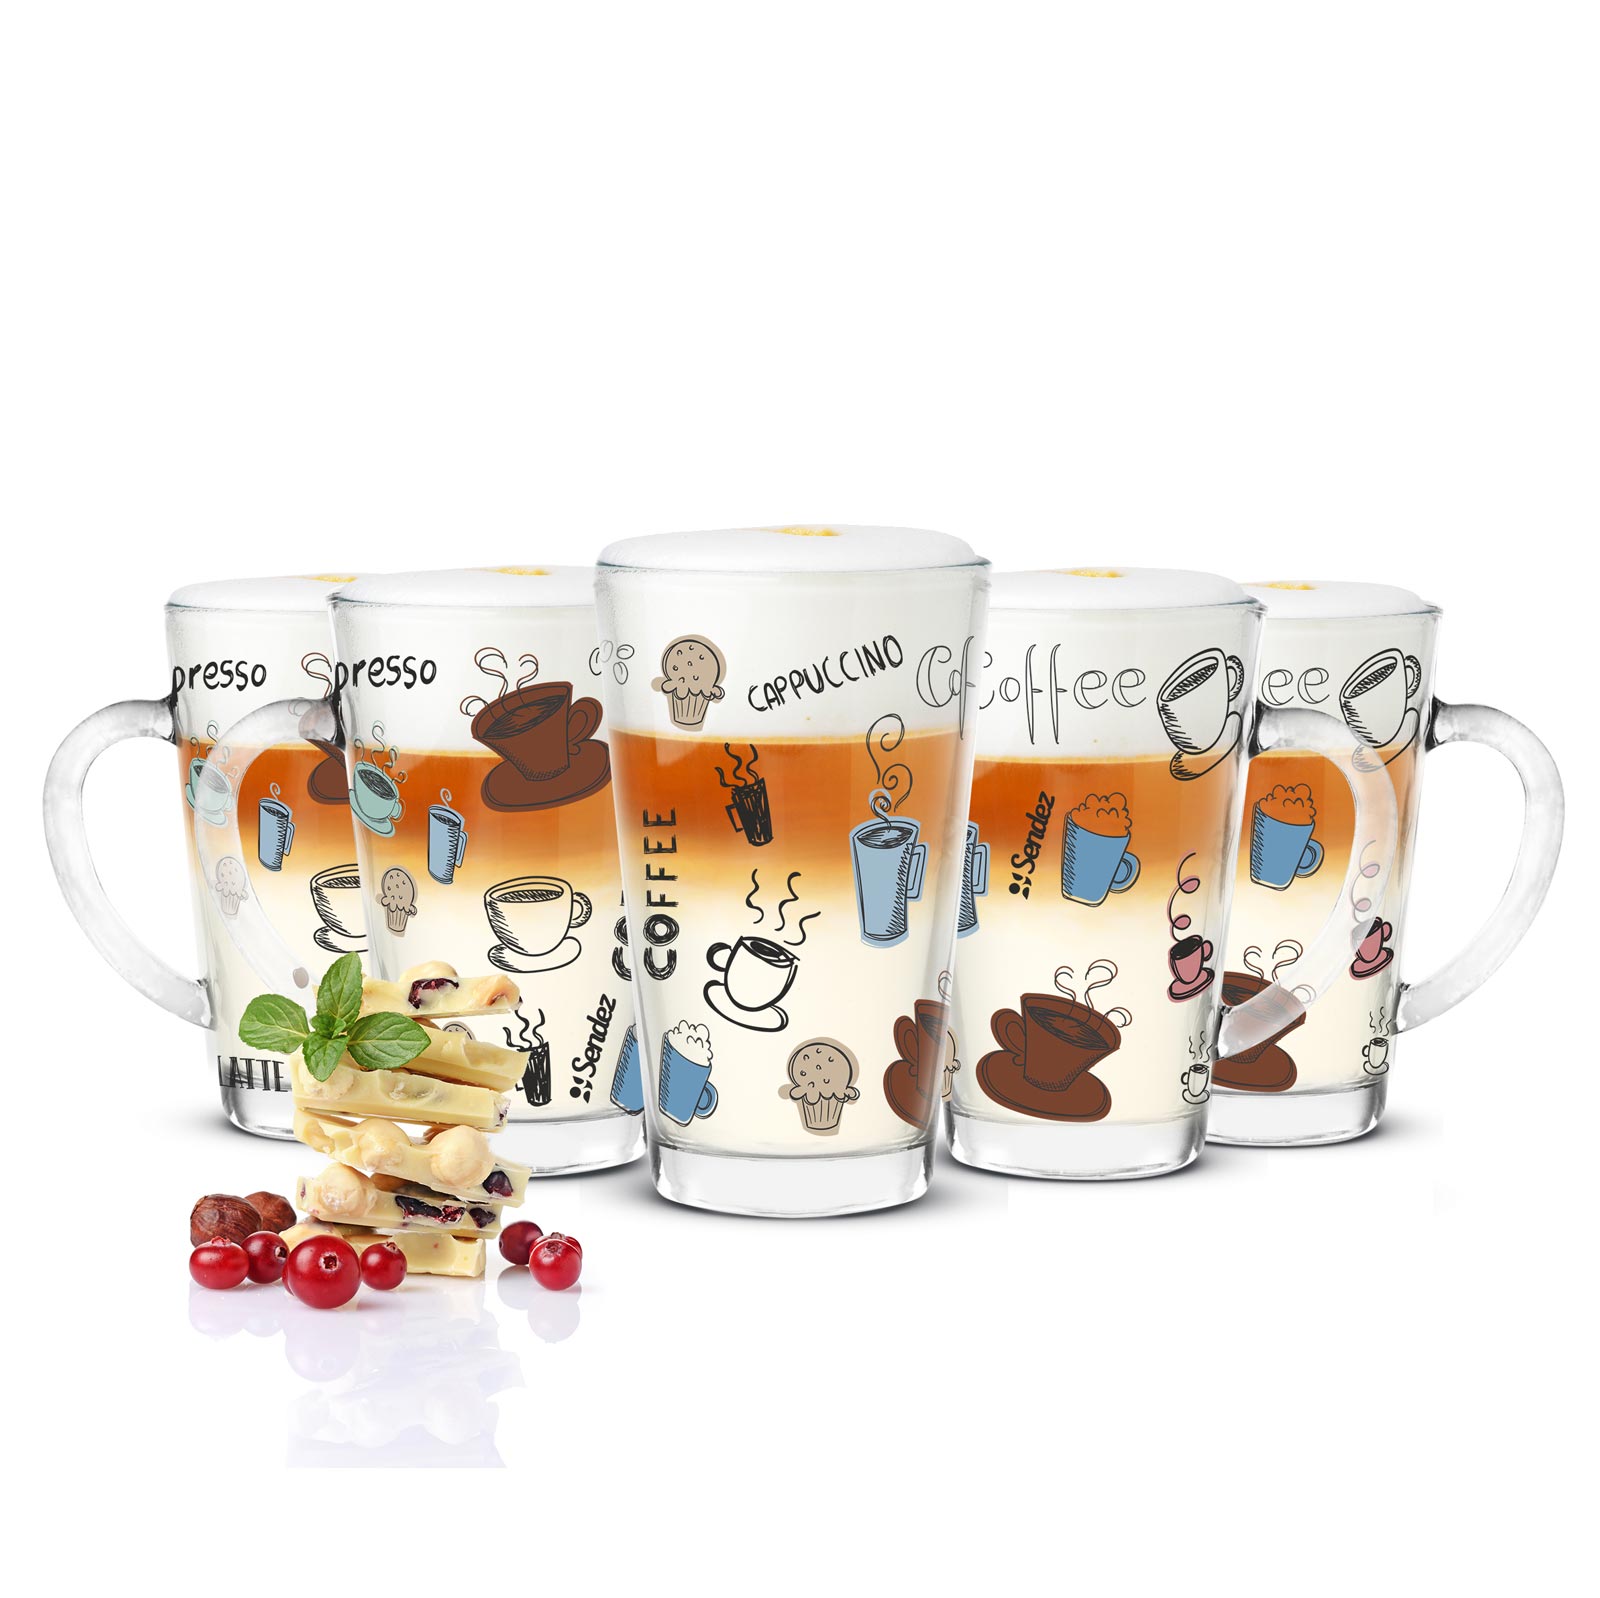 6 Latte Macchiato Gläser 300ml Kaffeegläser Teeglas mit buntem Kaffee-Aufdruck